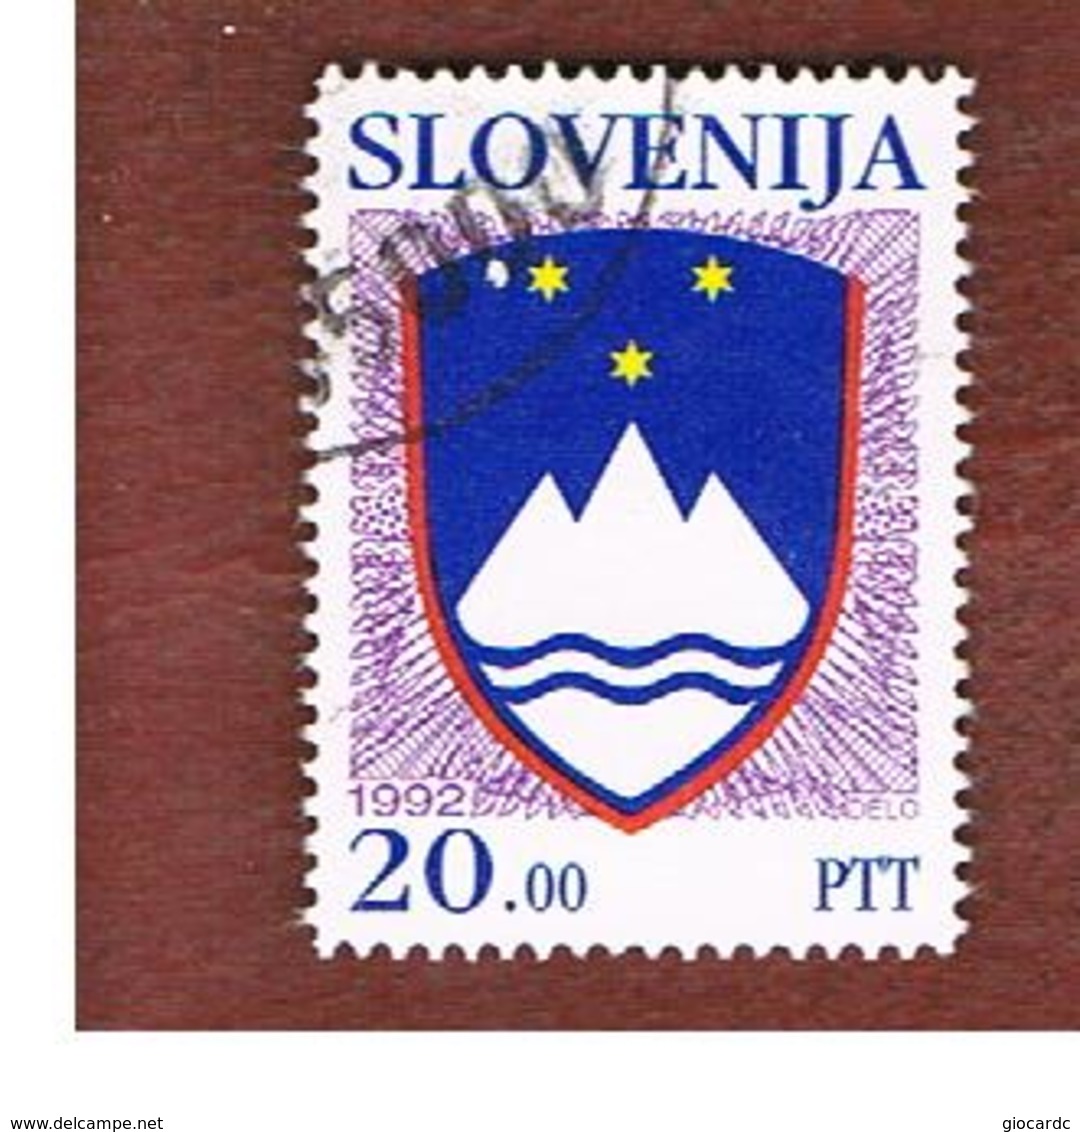 SLOVENIA  -   SG 148   -  1992  NATIONAL ARMS 20 -   USED - Slovenia